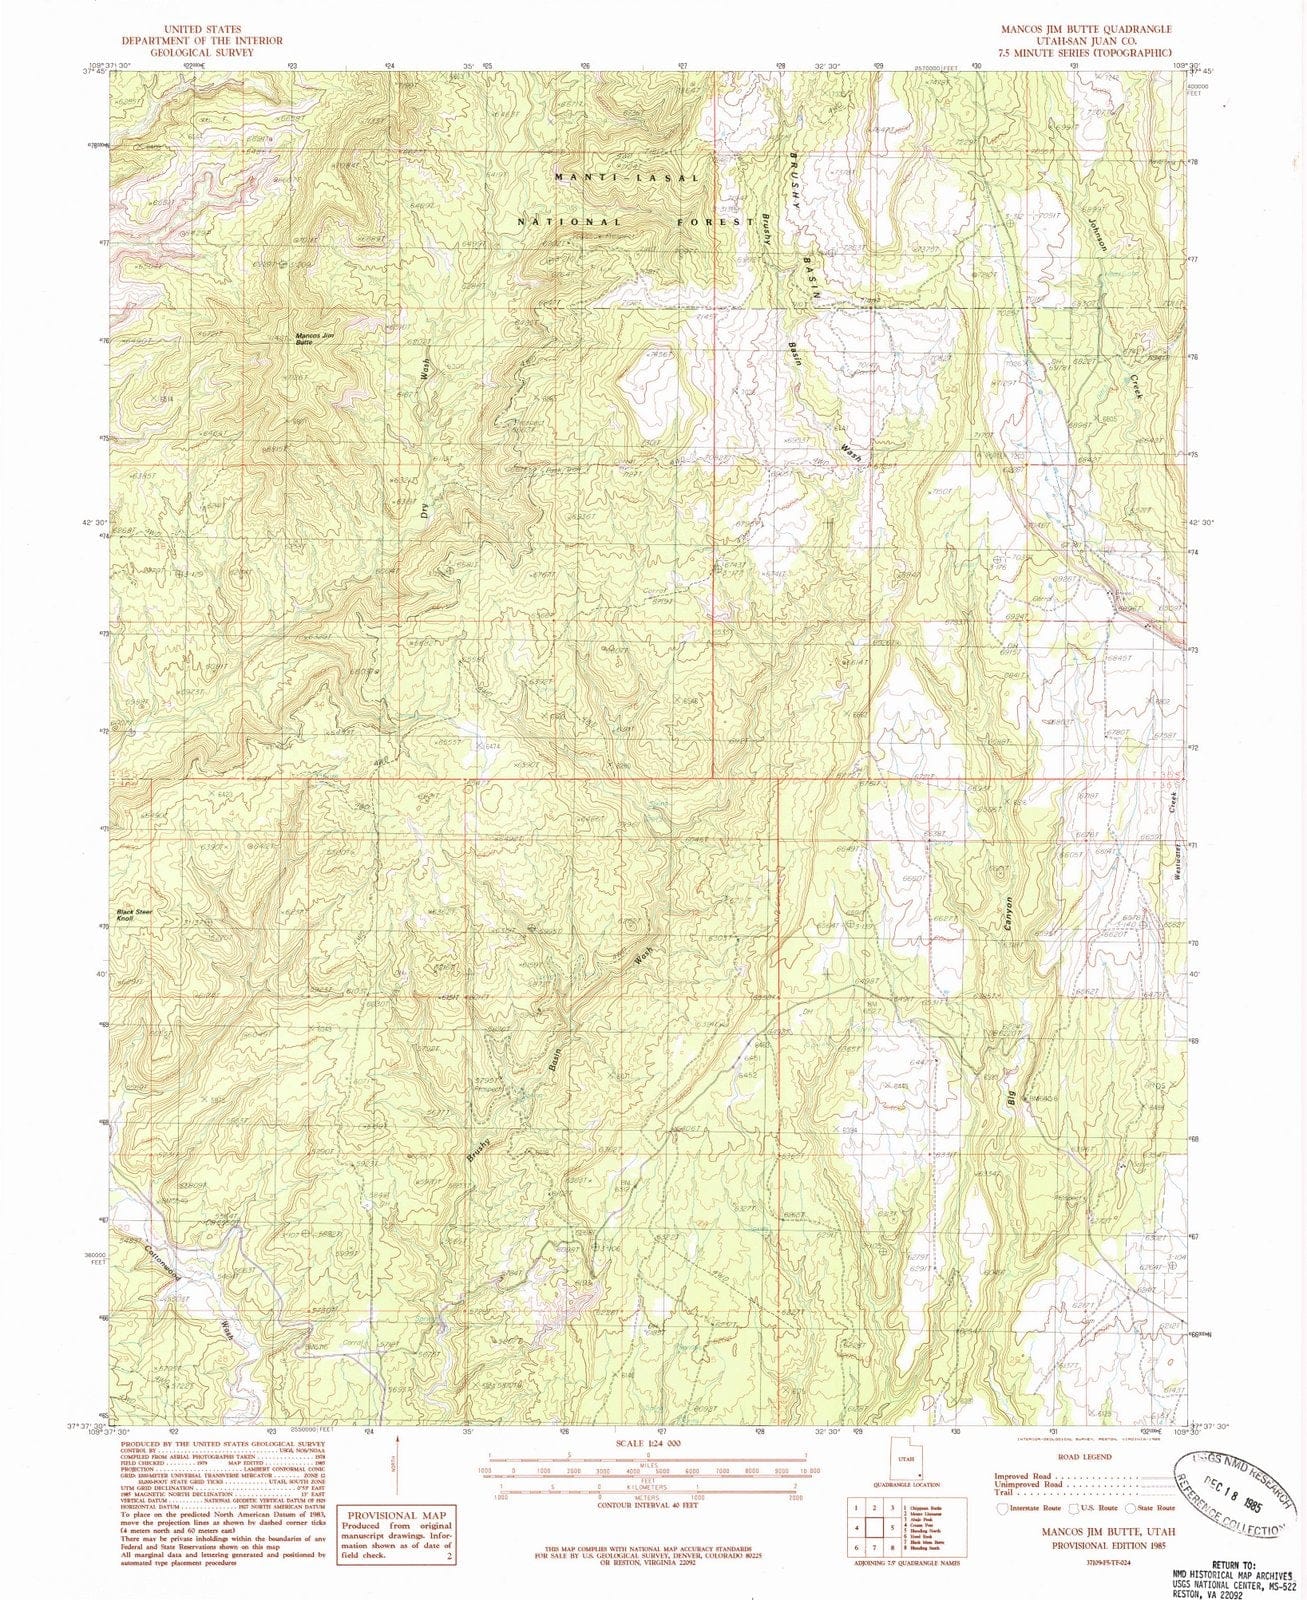 1985 Mancos Jim Butte, UT - Utah - USGS Topographic Map